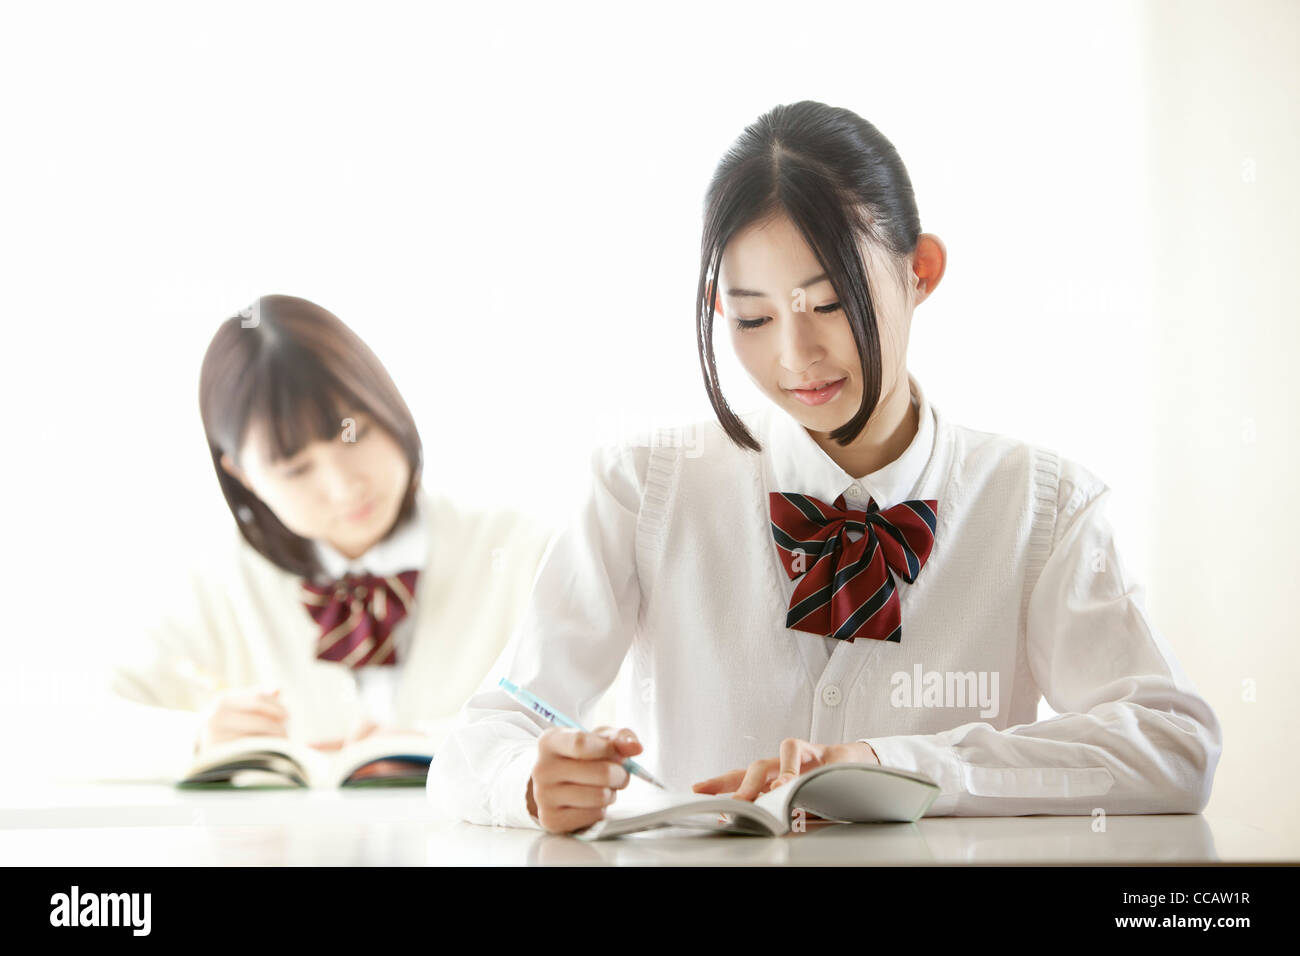 Two high school girls in class Stock Photo